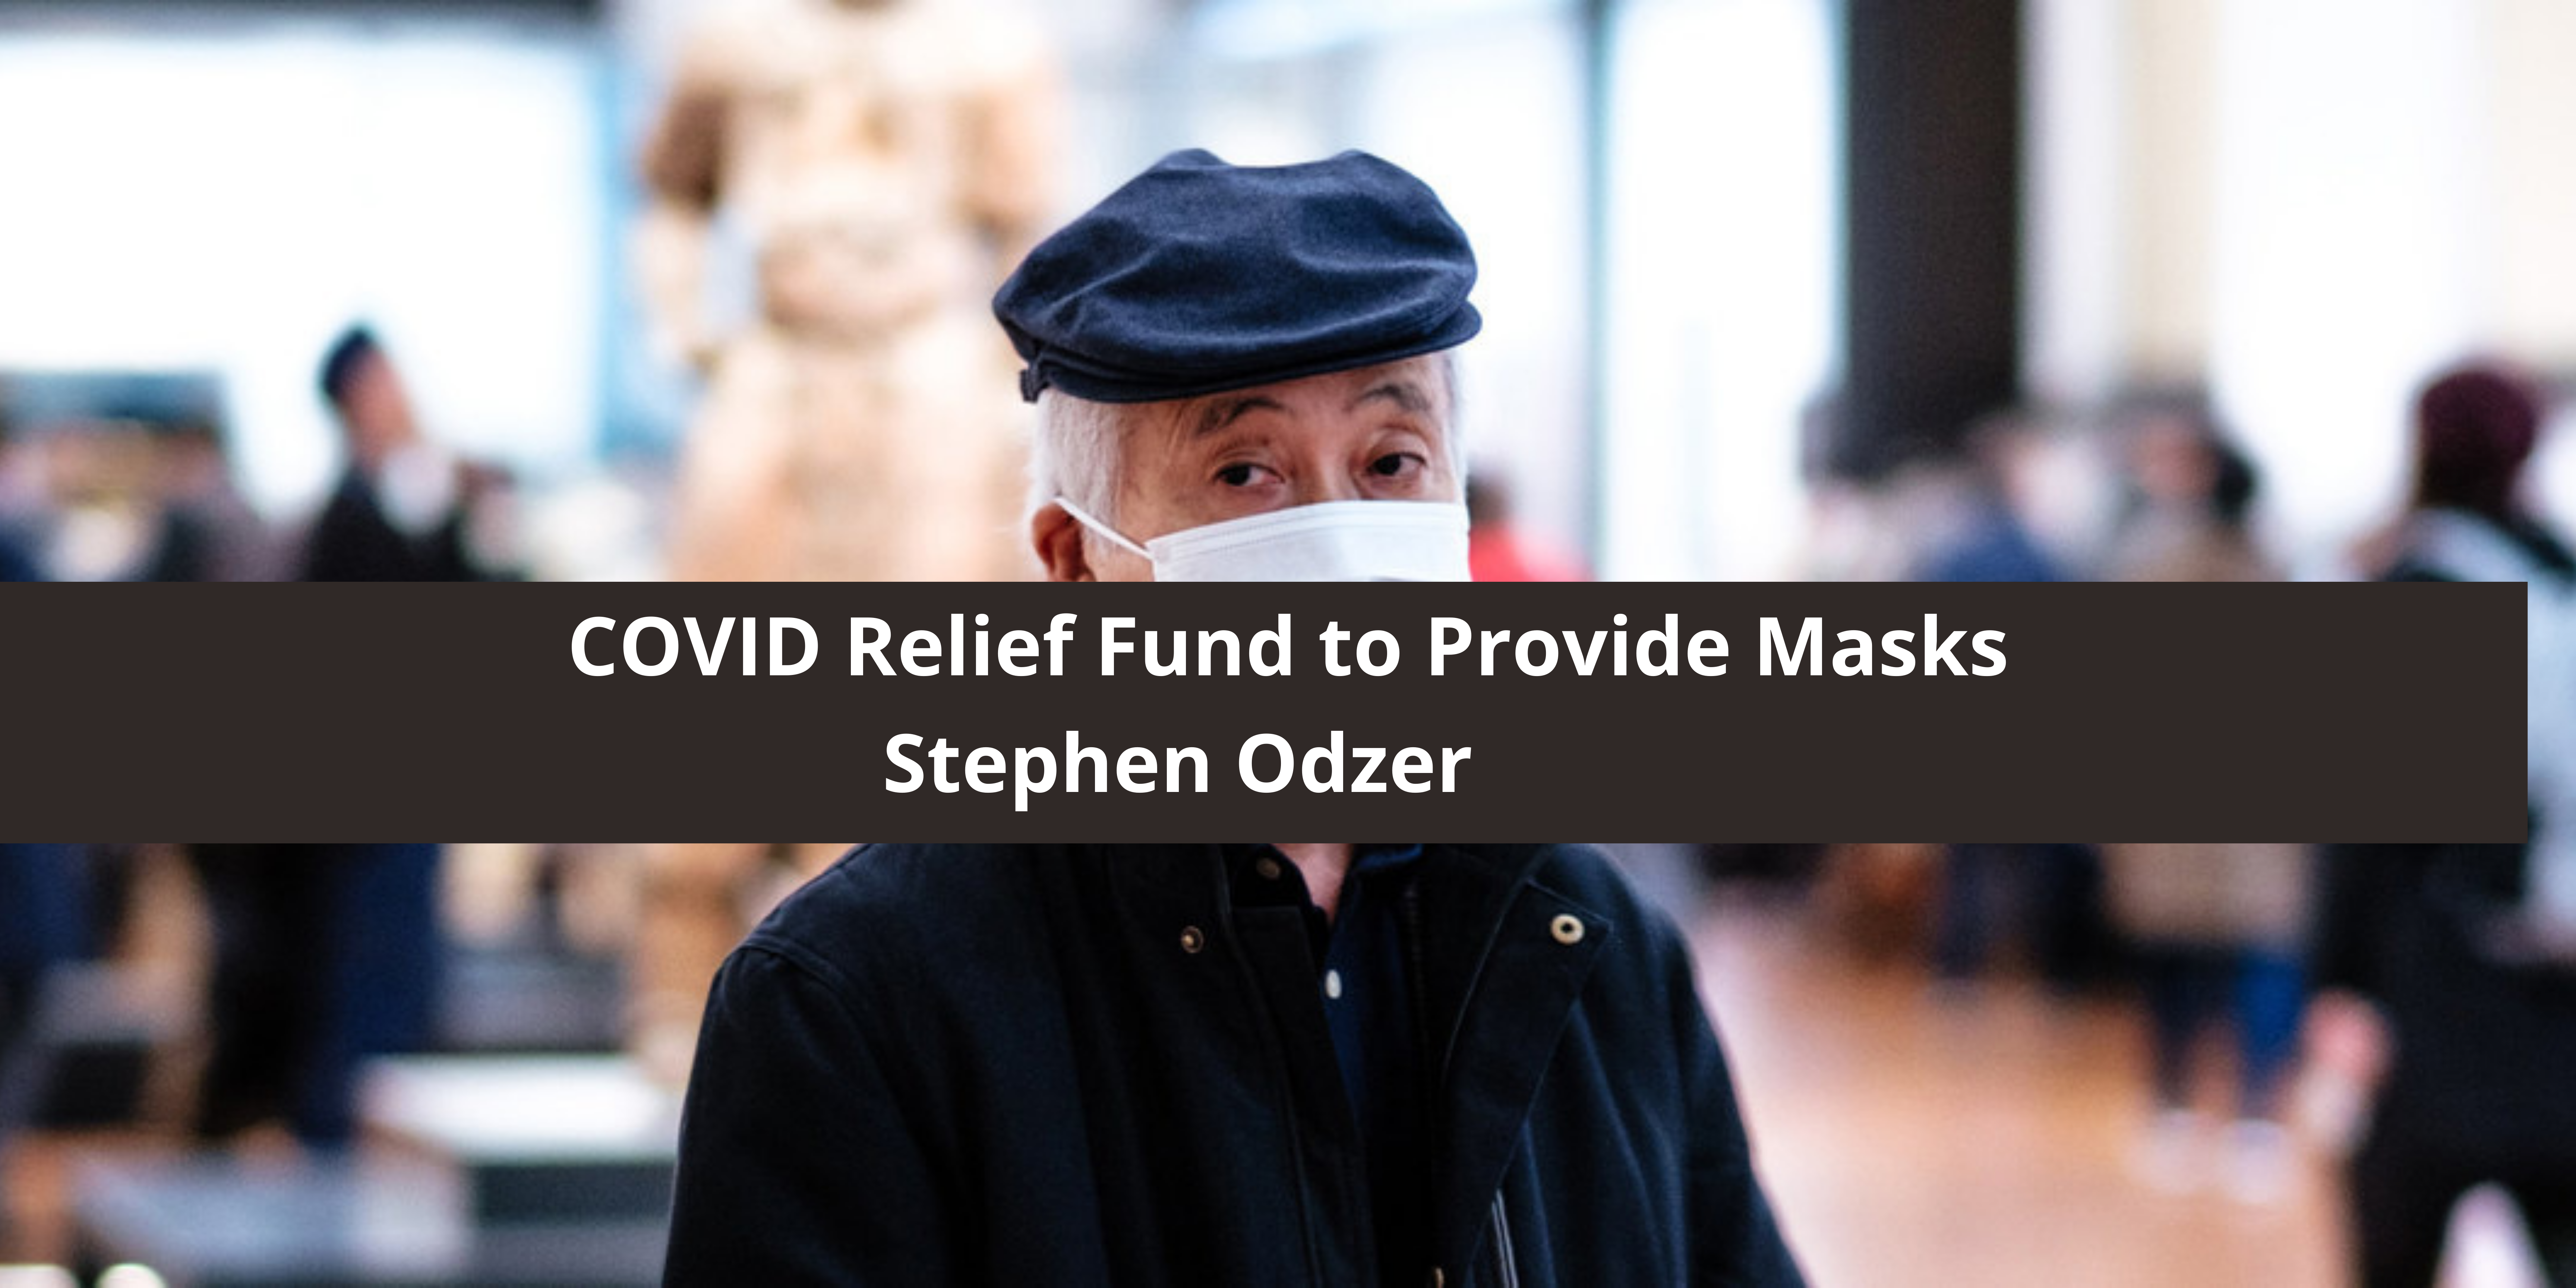 Stephen Odzer Founds Stephen Odzer COVID Relief Fund to Provide Masks